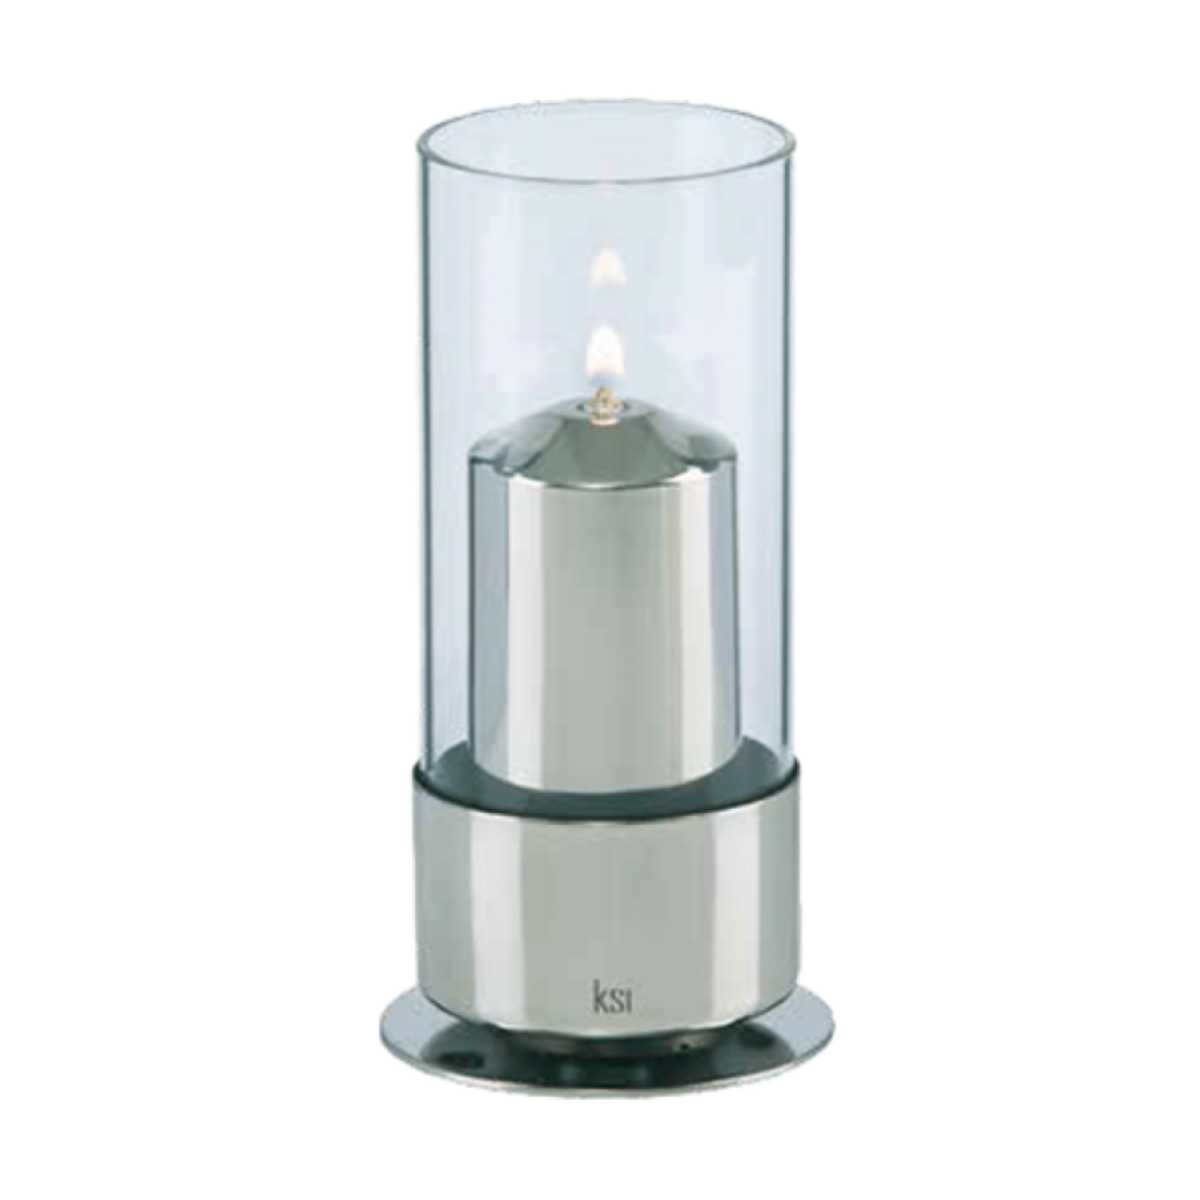 KSI Leggera 1 Table Lamp